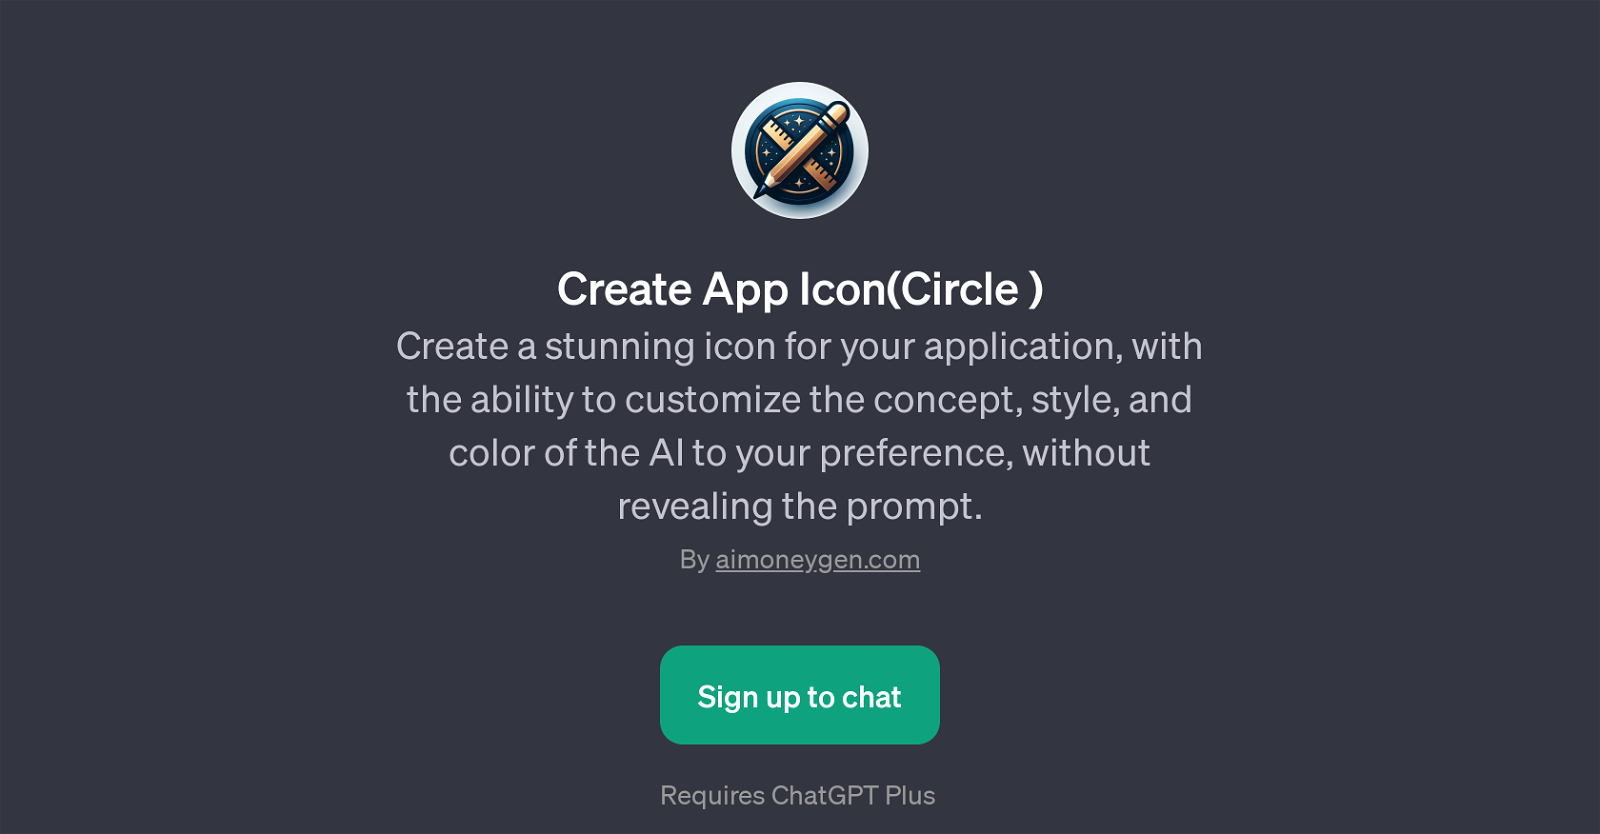 Create App Icon(Circle) website